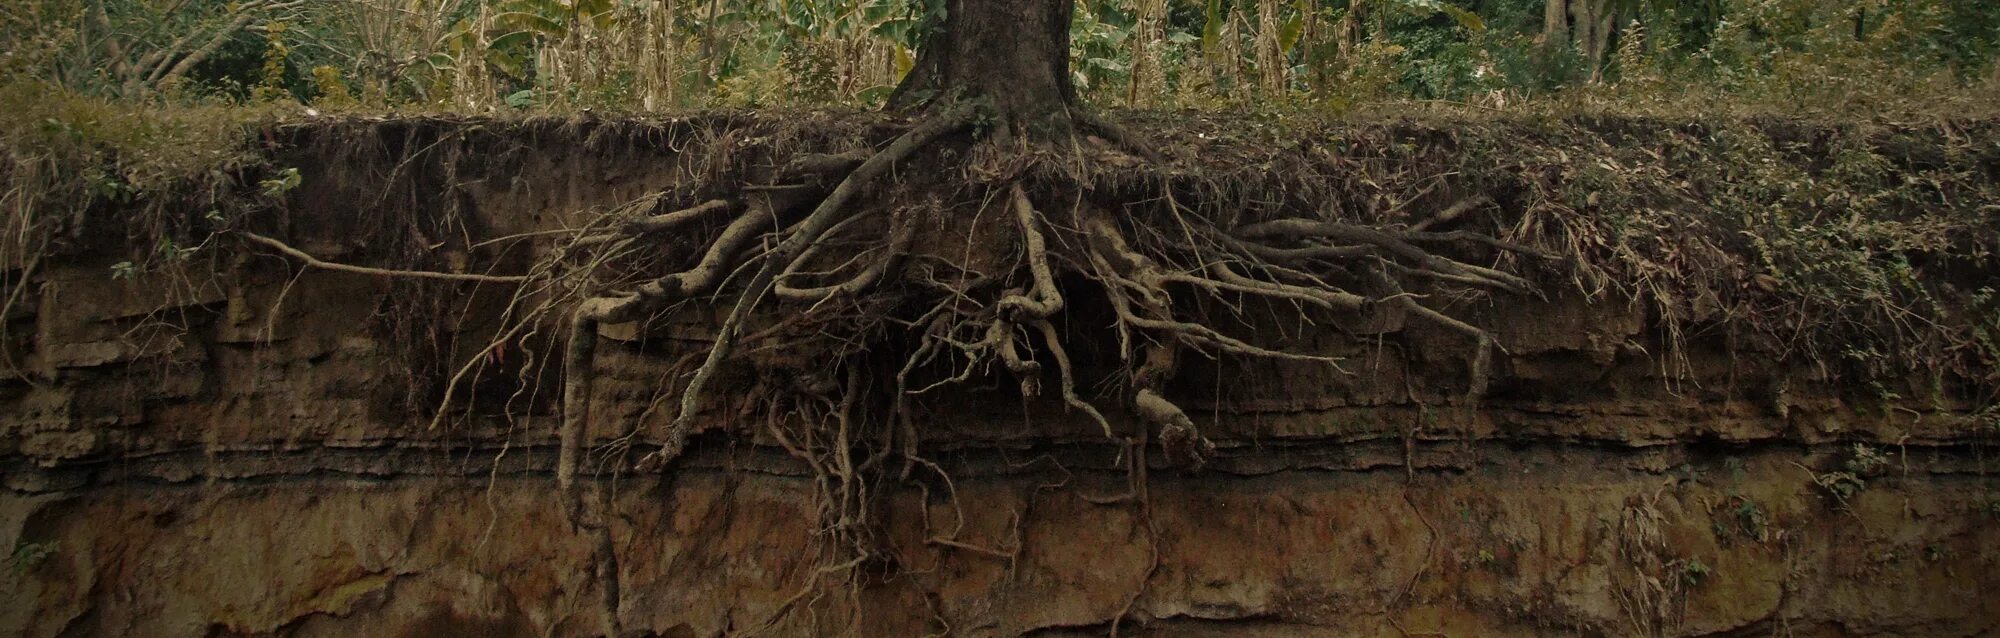 Самые глубокие корни. Корни под землей. Корни дерева под землей. Земля под деревом. Корни дерева в почве.